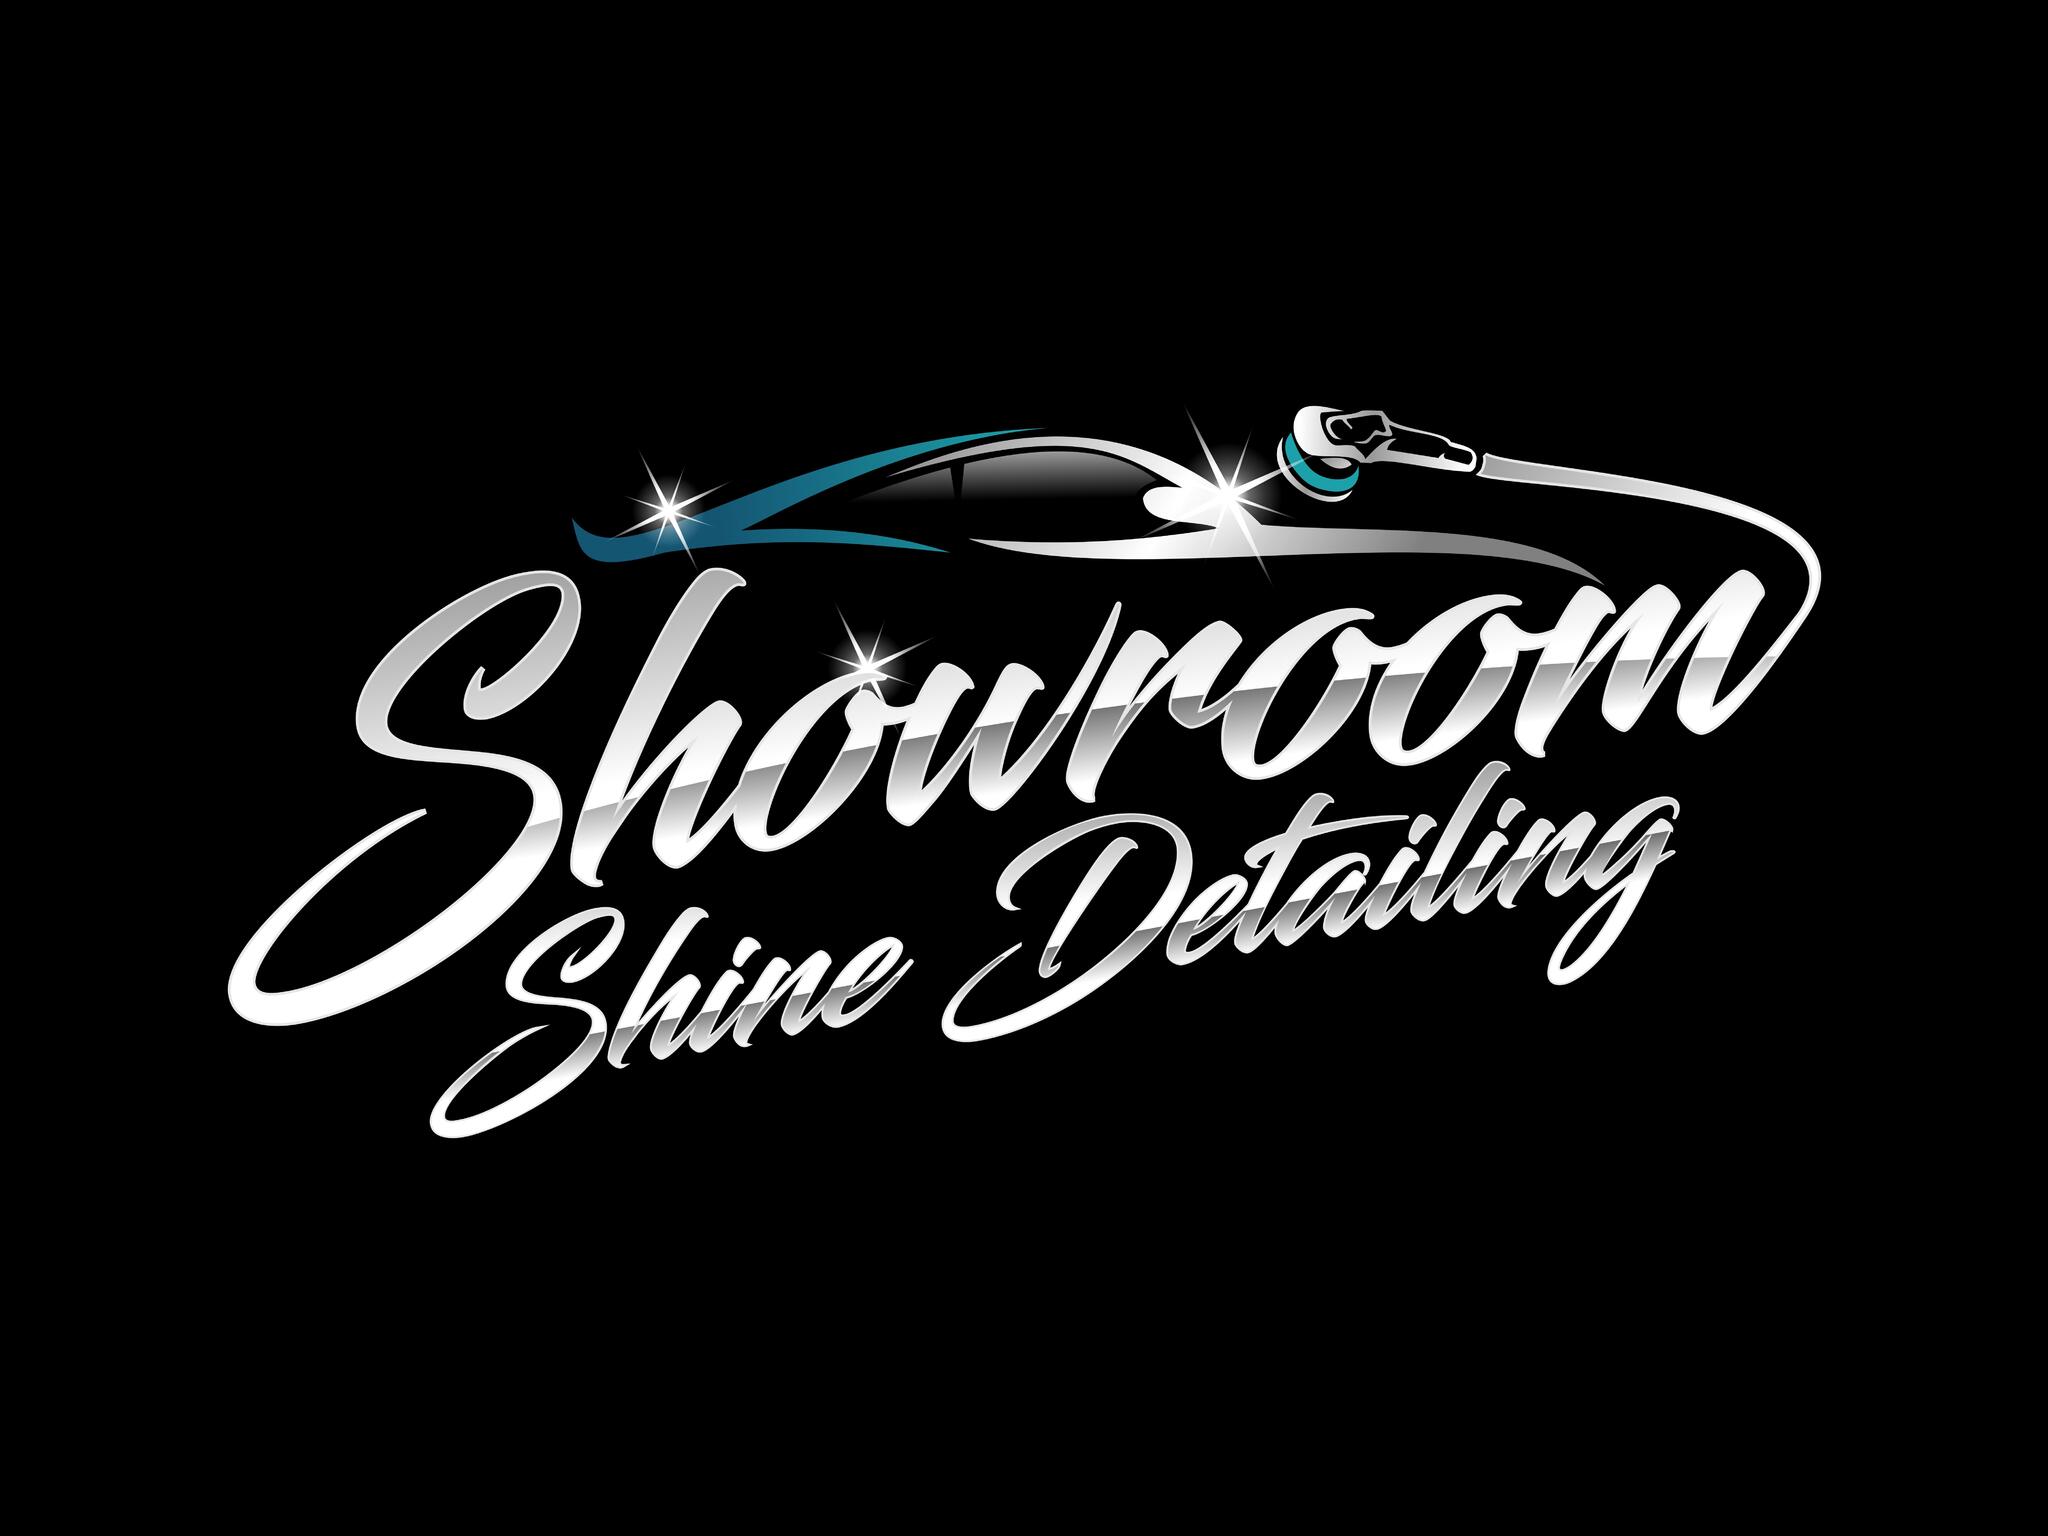 Show Room Shine